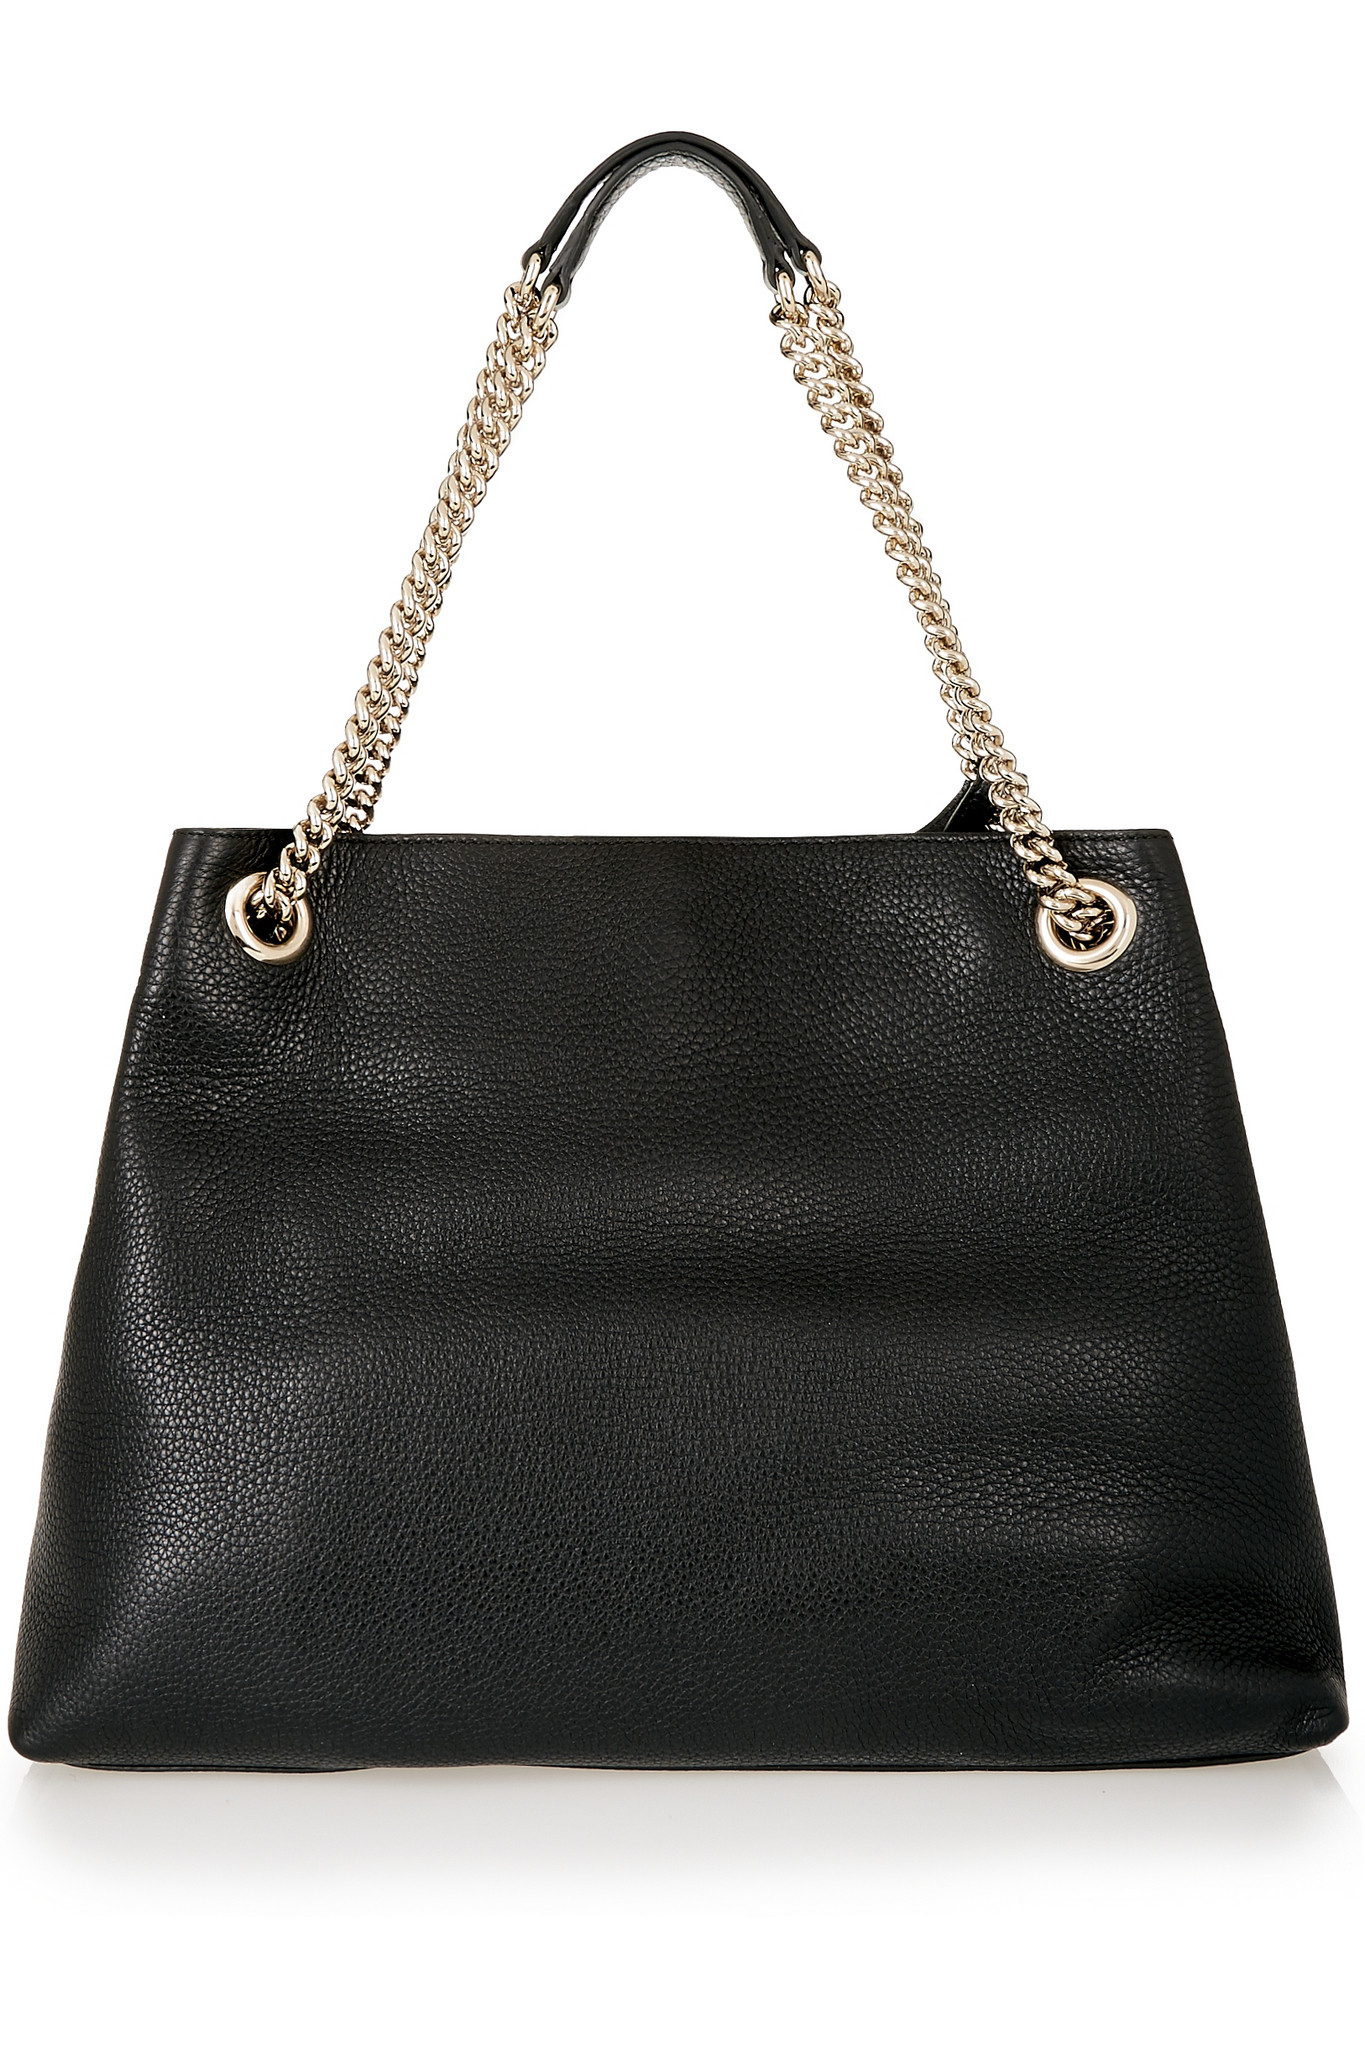 Lyst - Gucci Soho Medium Textured-leather Shoulder Bag in Black